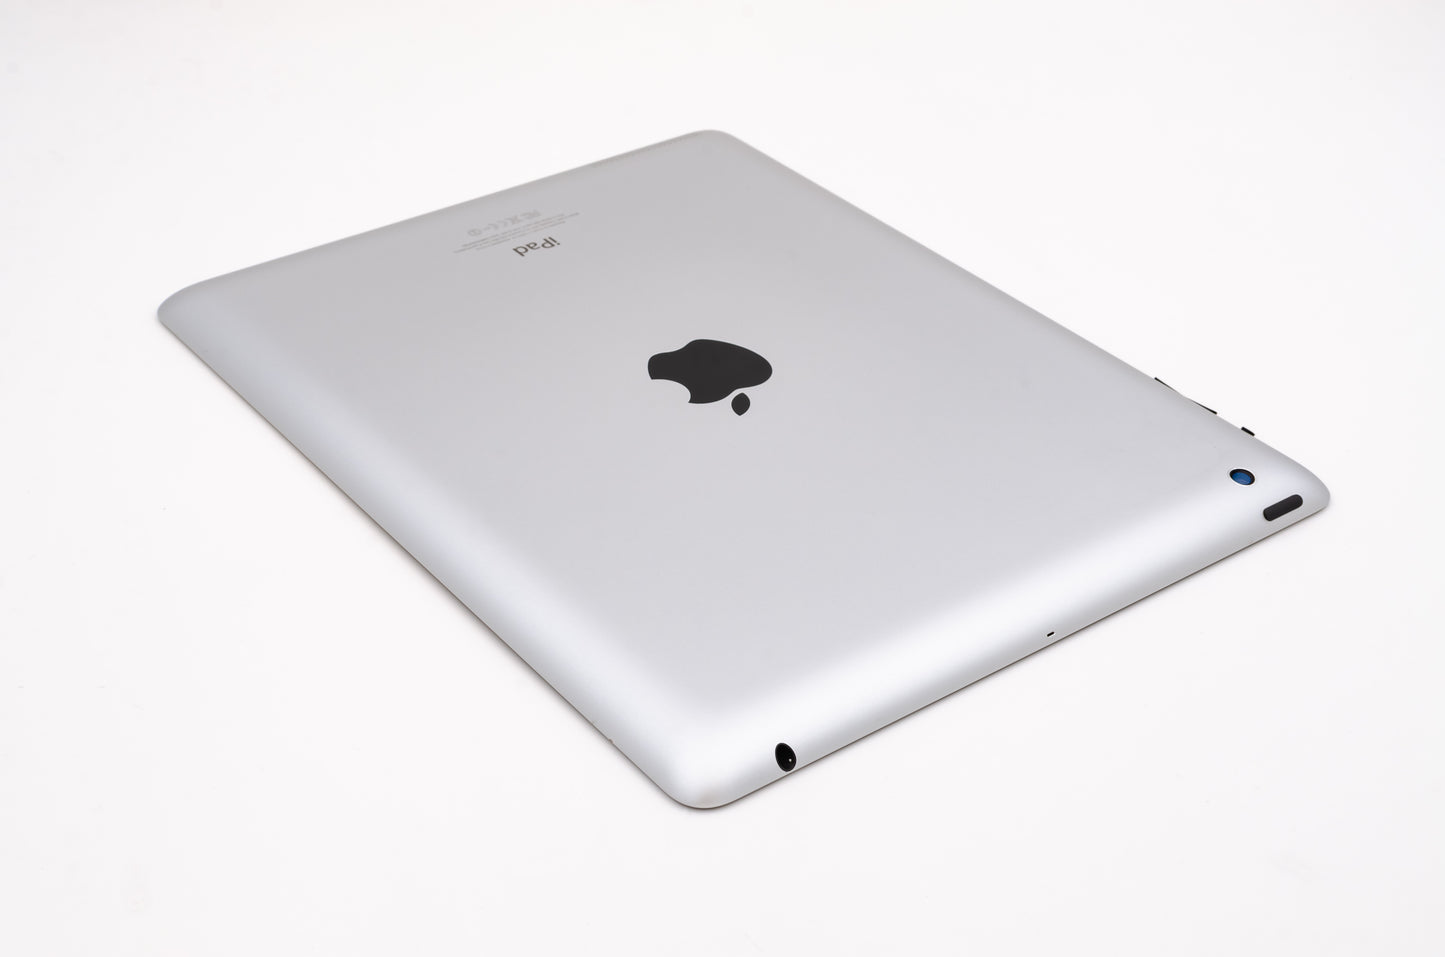 apple-2012-9.7-inch-ipad-4-a1458-silver/white-4